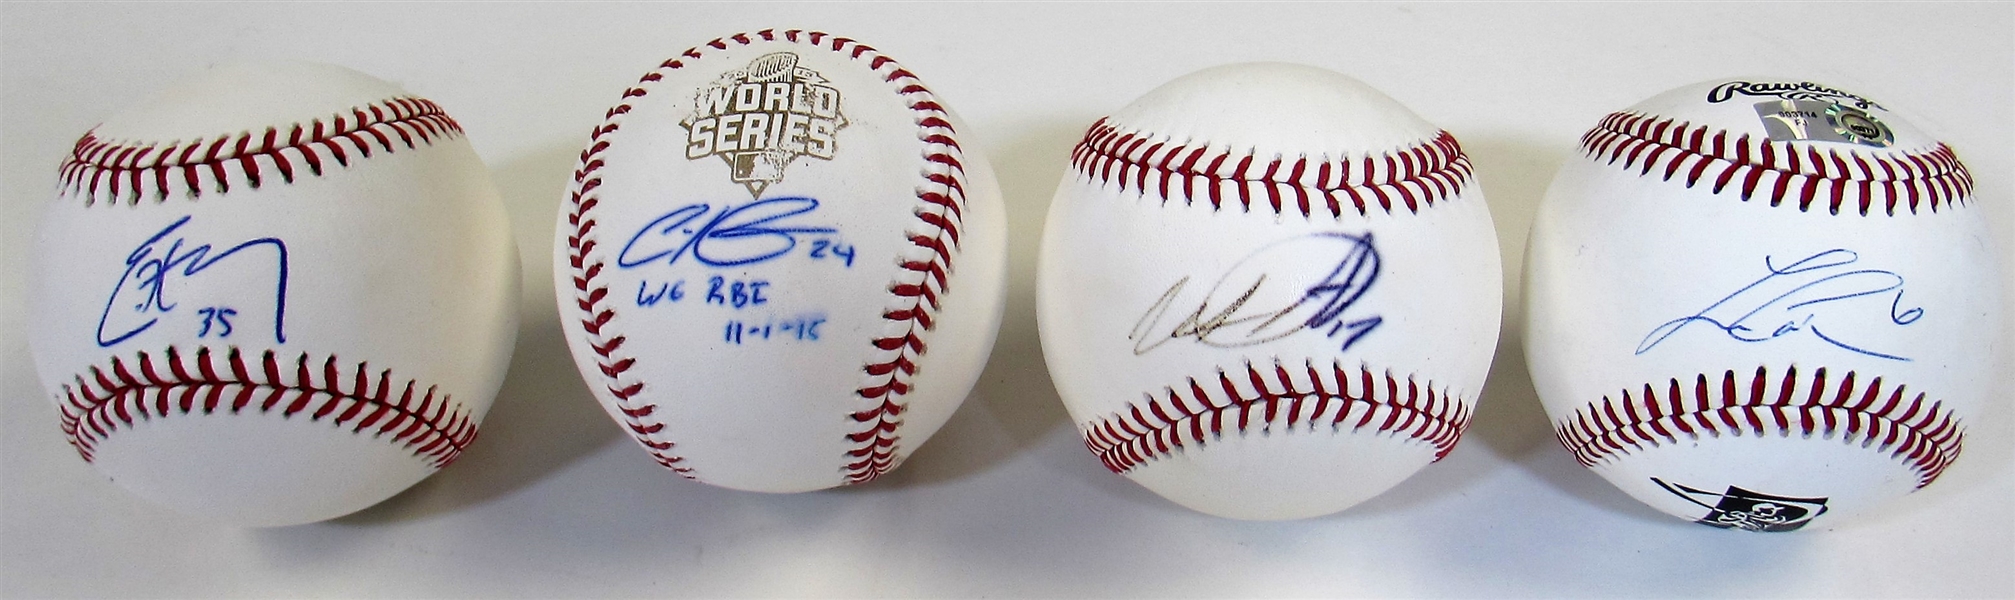 Eric Hosmer-Wade Davis-Lo Cain-Christian Colon  Signed Baseballs